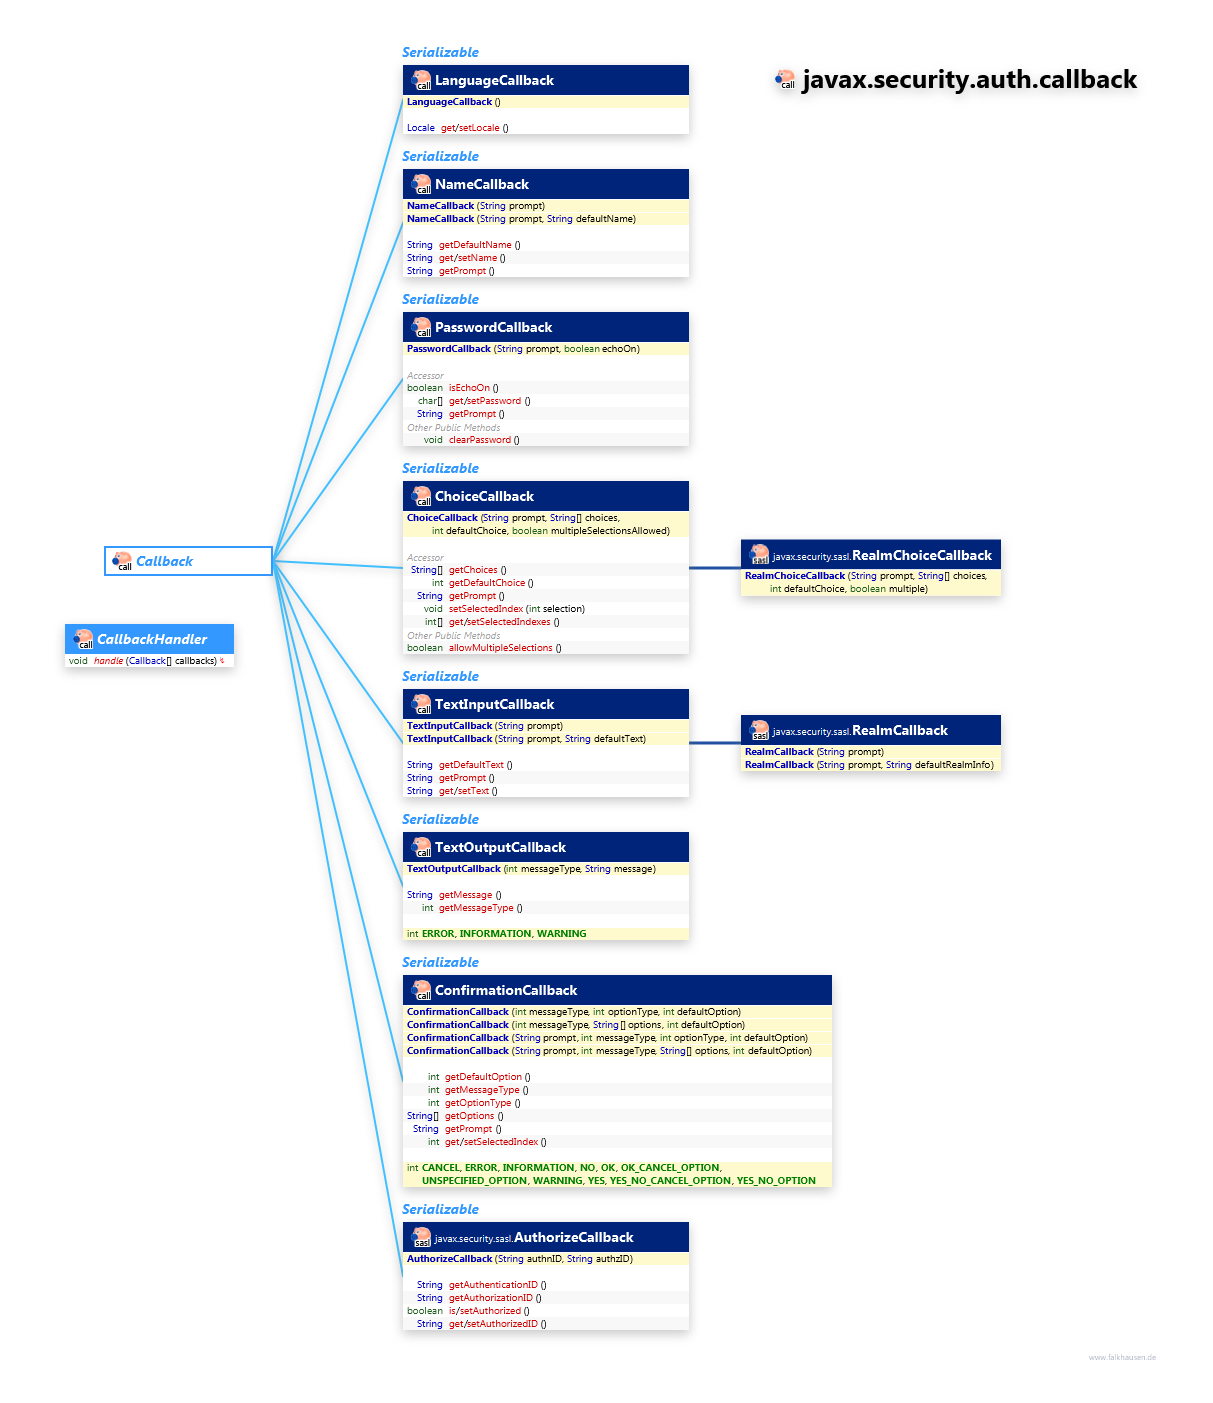 javax.security.auth.callback class diagram and api documentation for Java 8